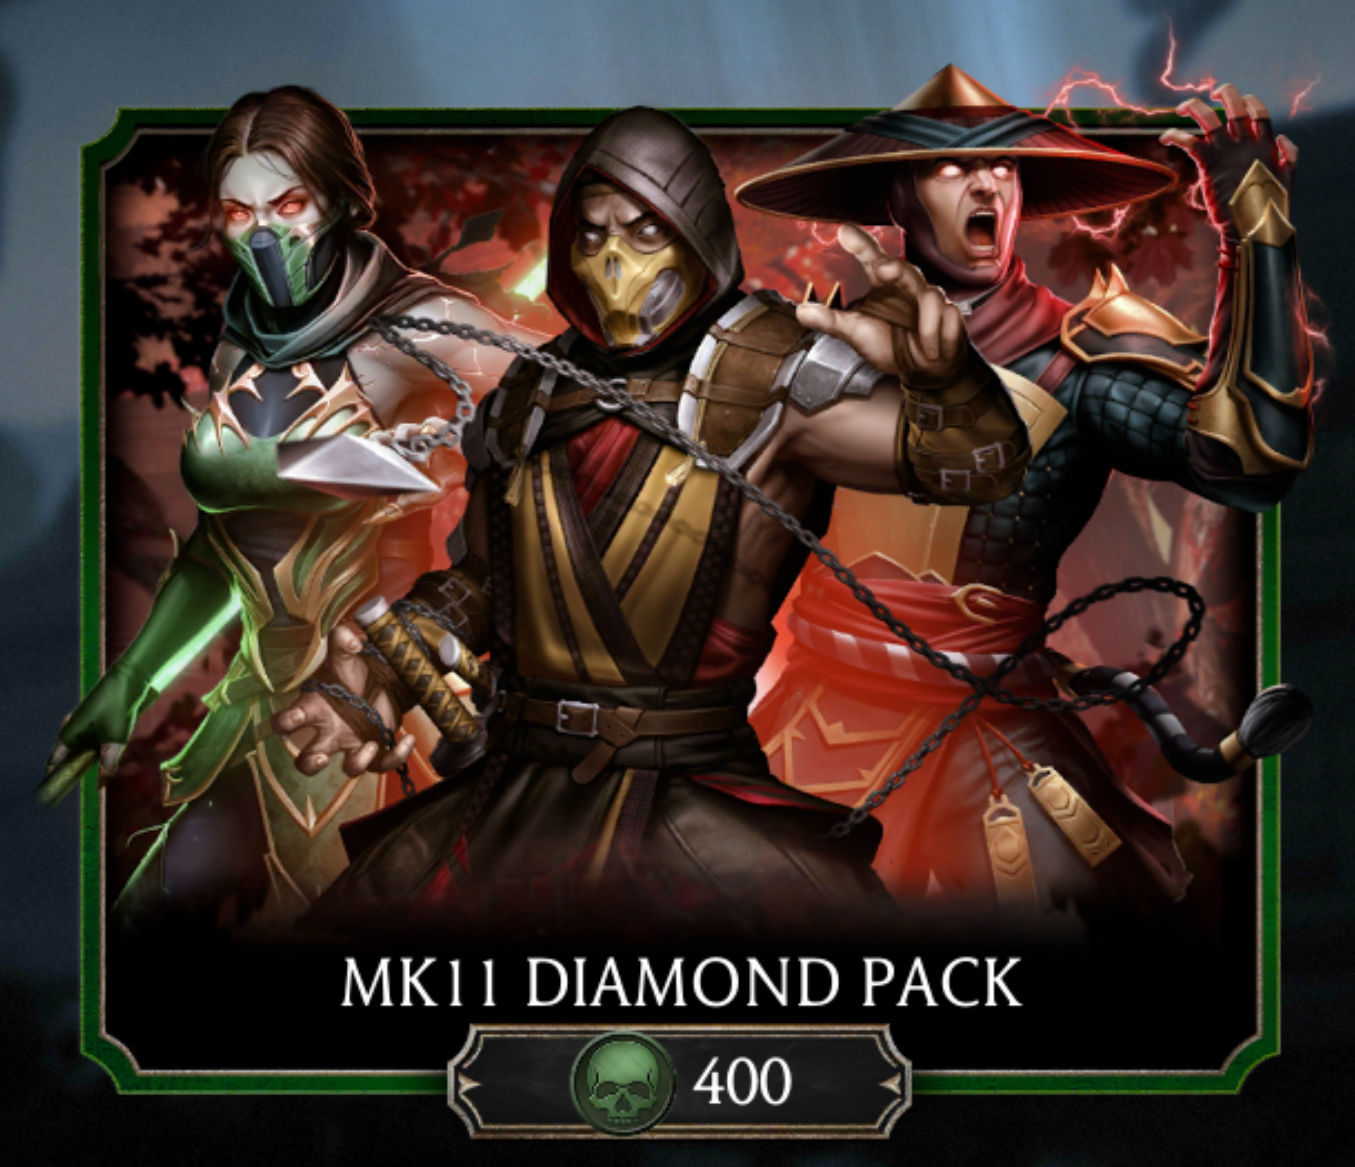 Mortal Kombat 11 - Kombat Pack